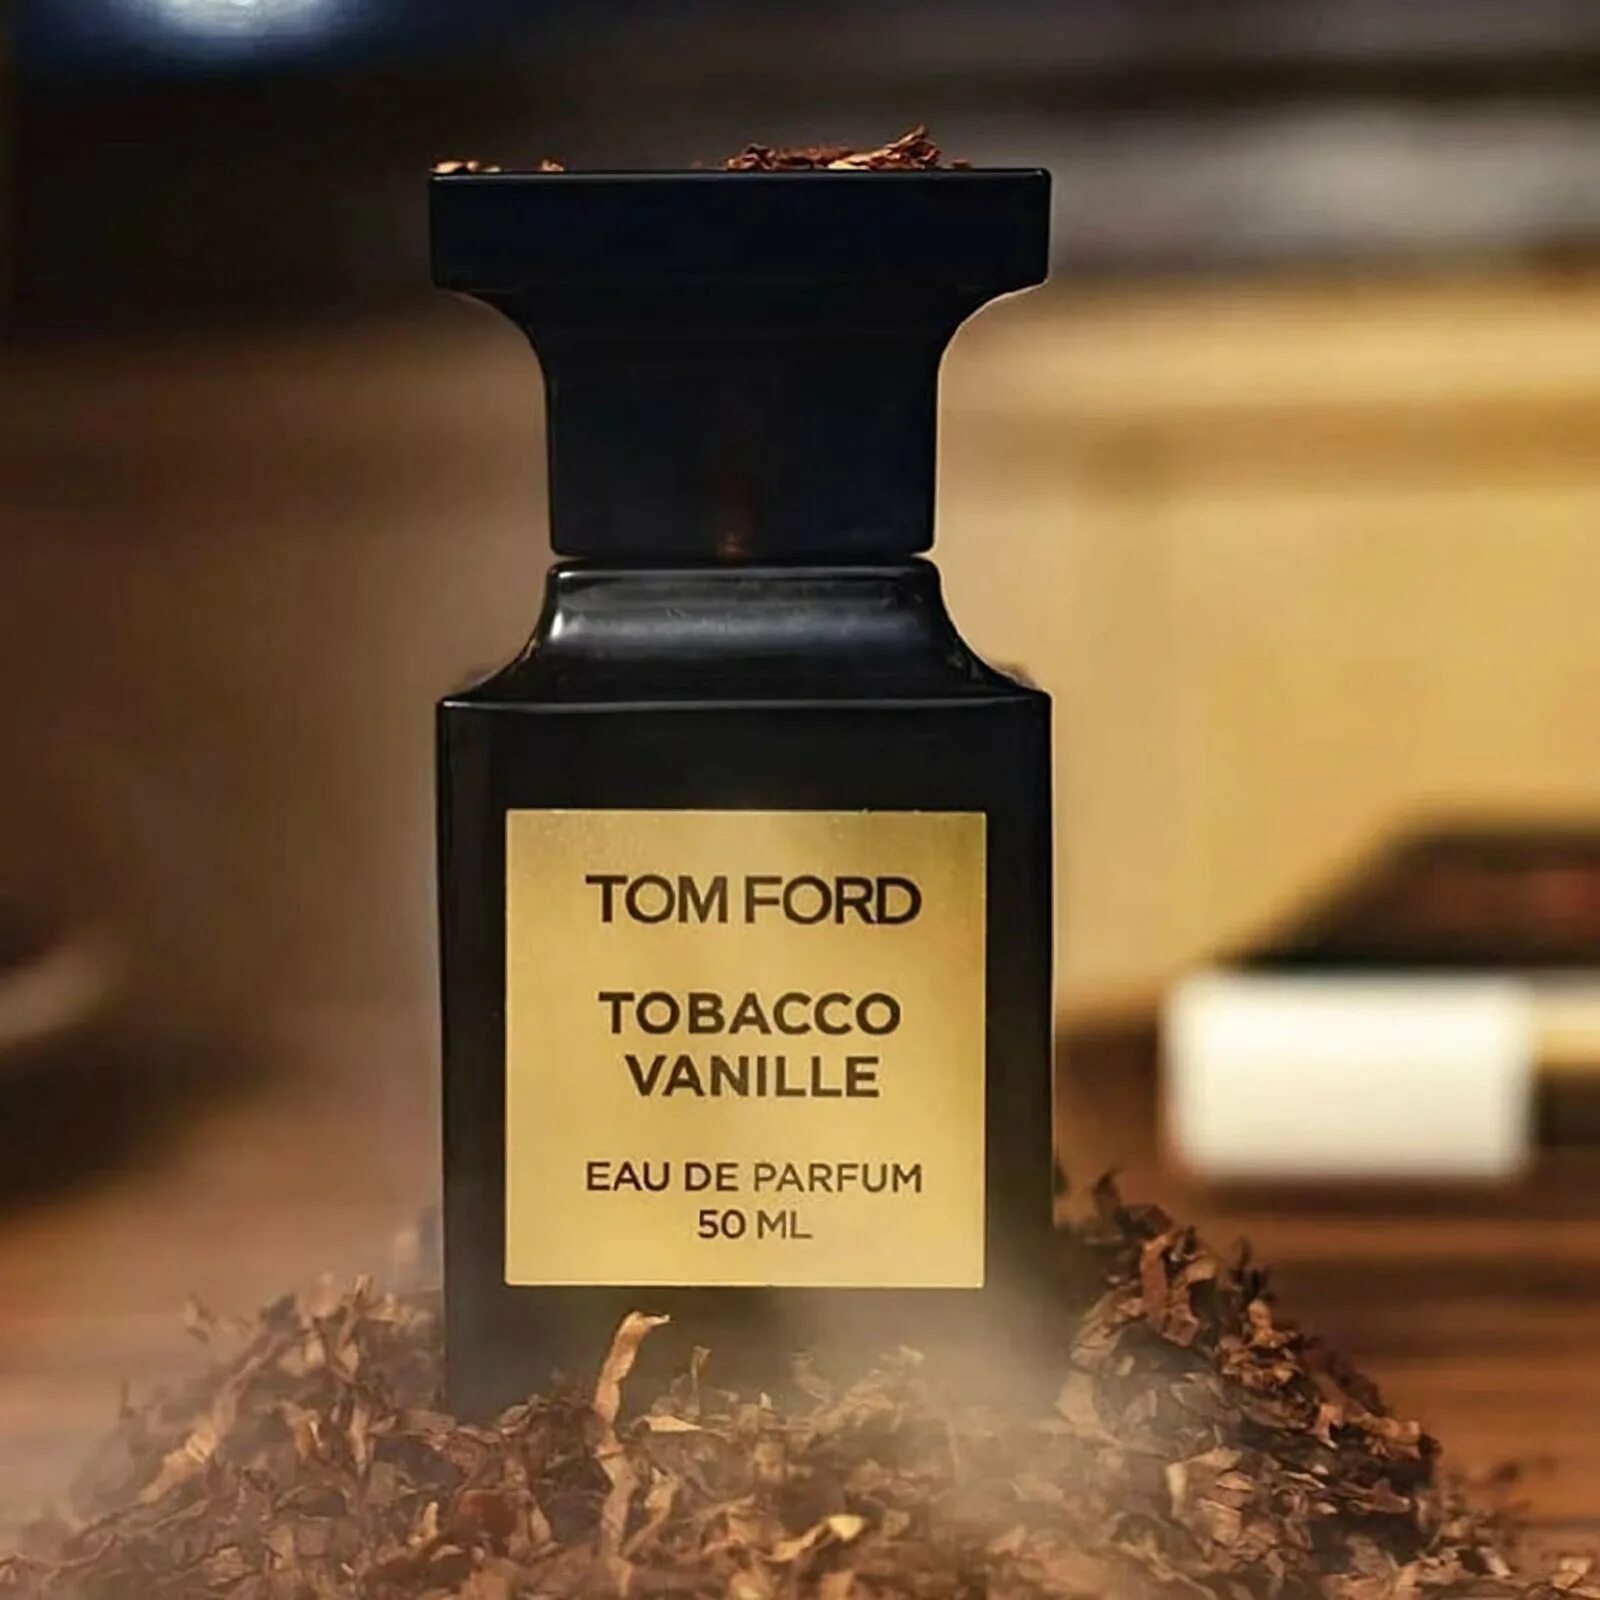 Tom Ford Tobacco Vanille. Tom Ford Tobacco Vanille мужской. Tom Ford Tobacco Vanille 50ml. Том Форт табако ваниль.